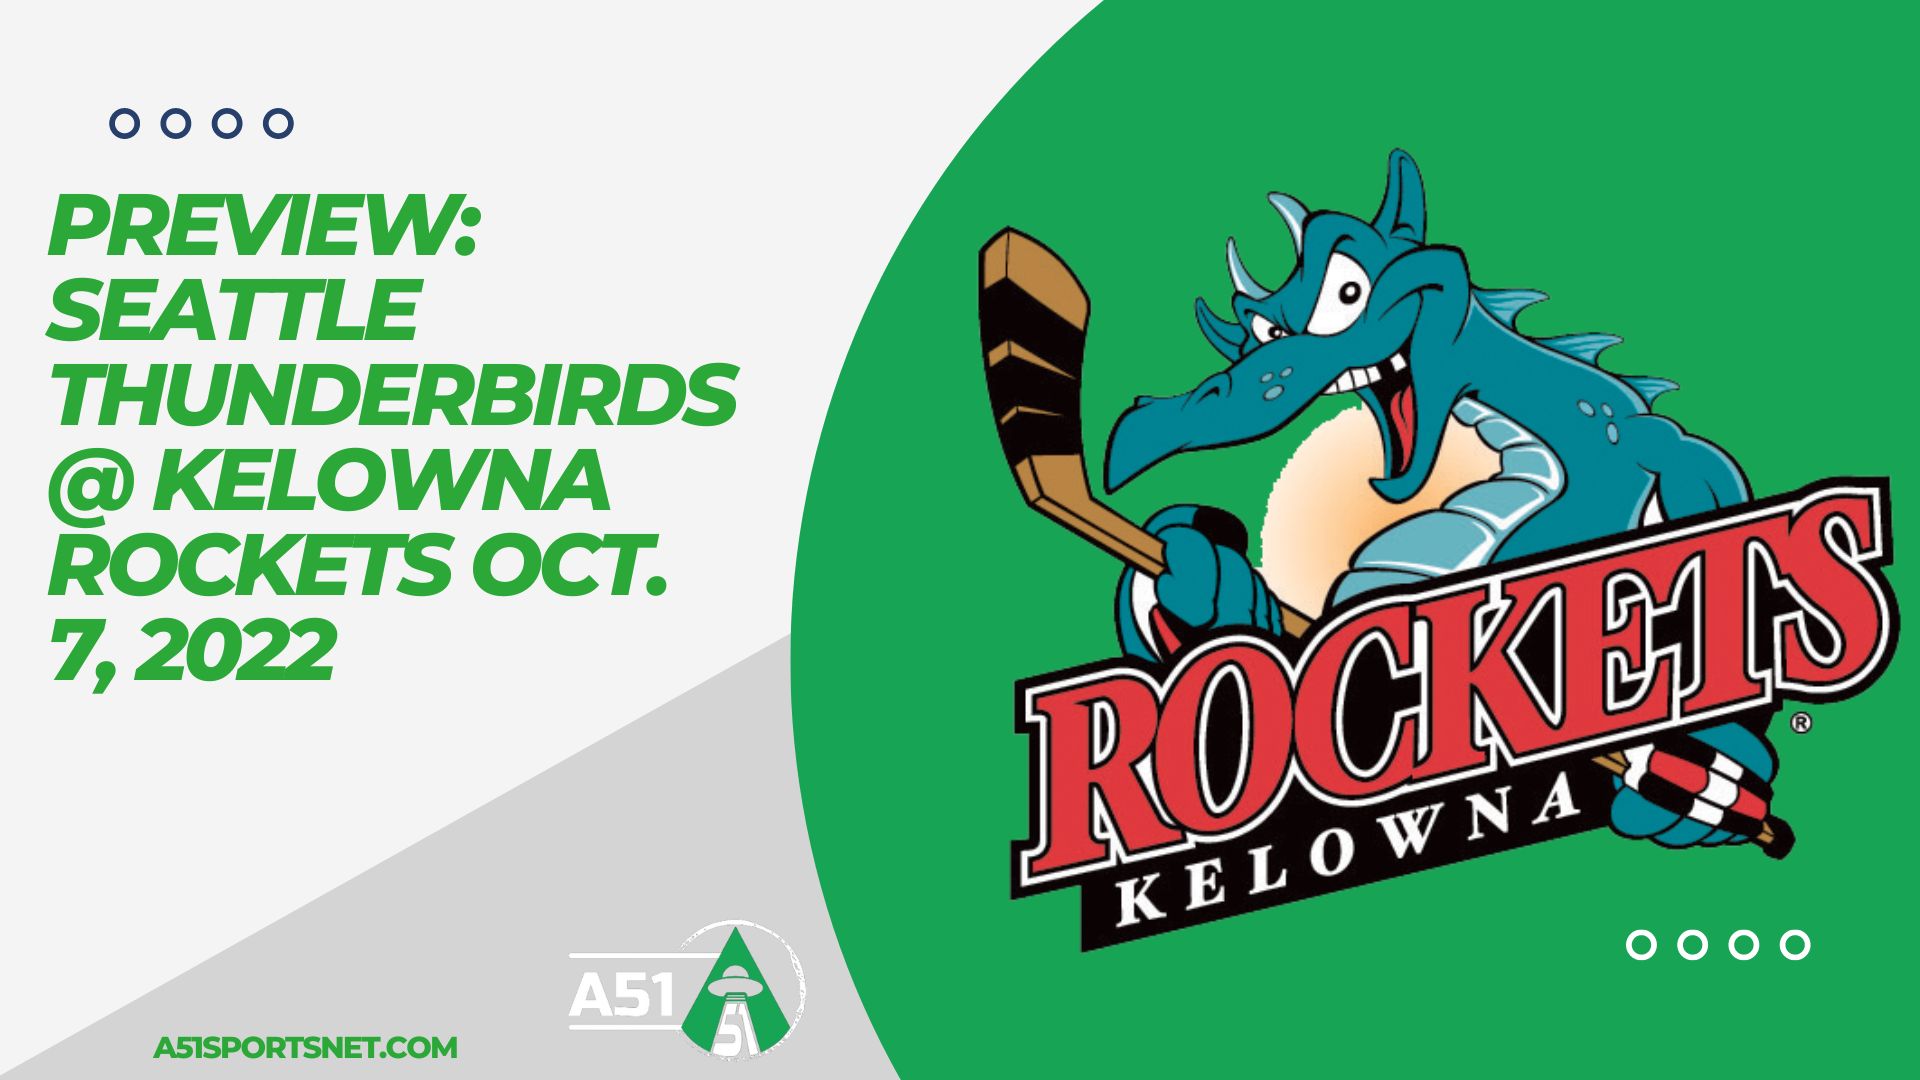 PREVIEW: Seattle Thunderbirds @ Kelowna Rockets Oct. 7, 2022